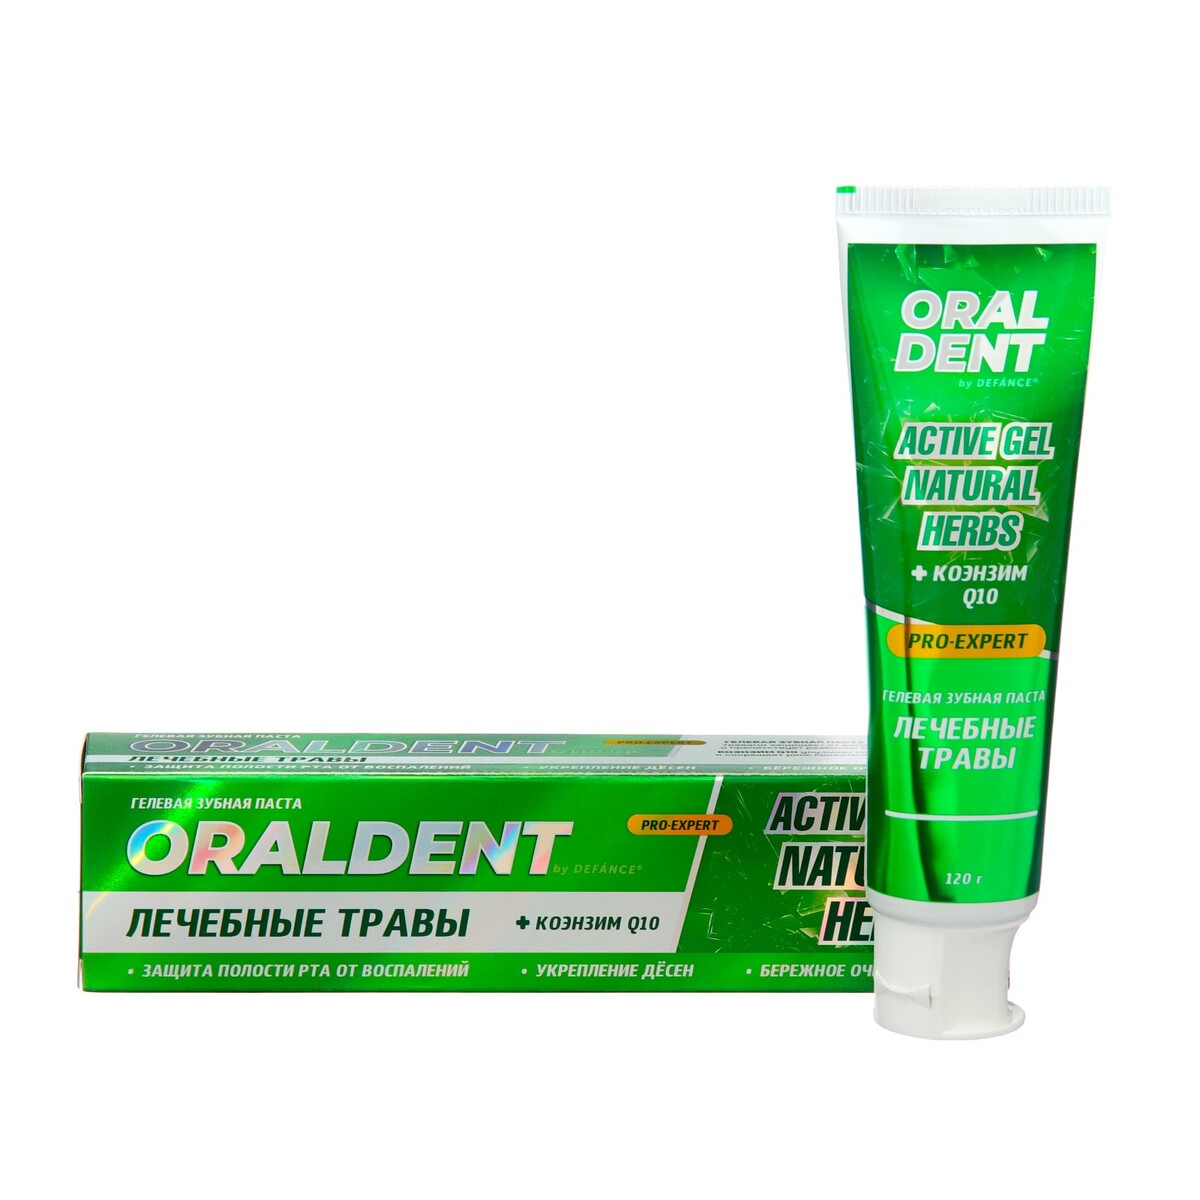   defance oraldent active gel natural herbs, 120 